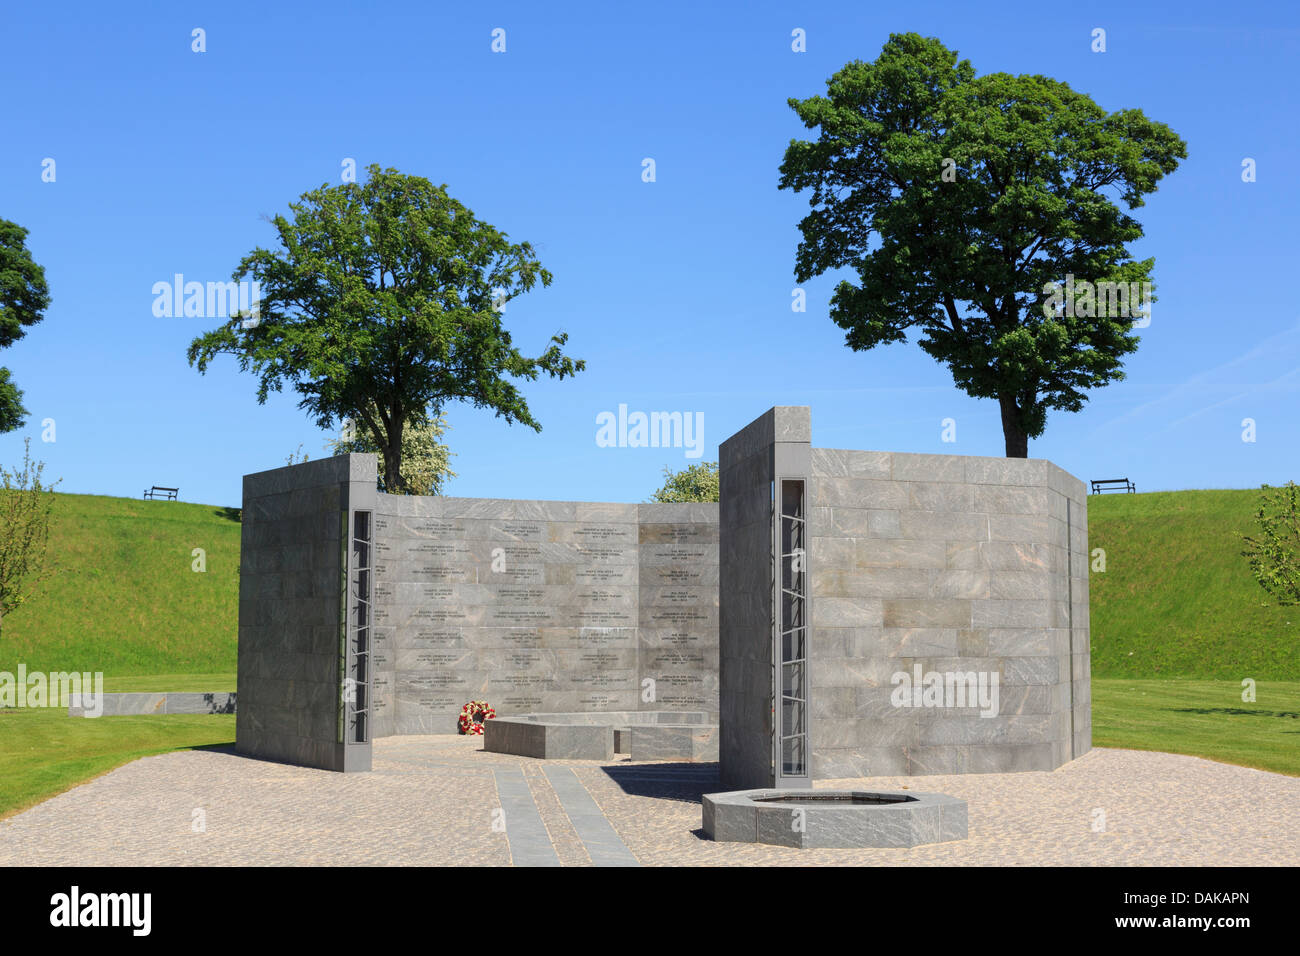 new-danish-national-monument-of-remembrance-war-memorial-to-dead-soldiers-DAKAPN.jpg